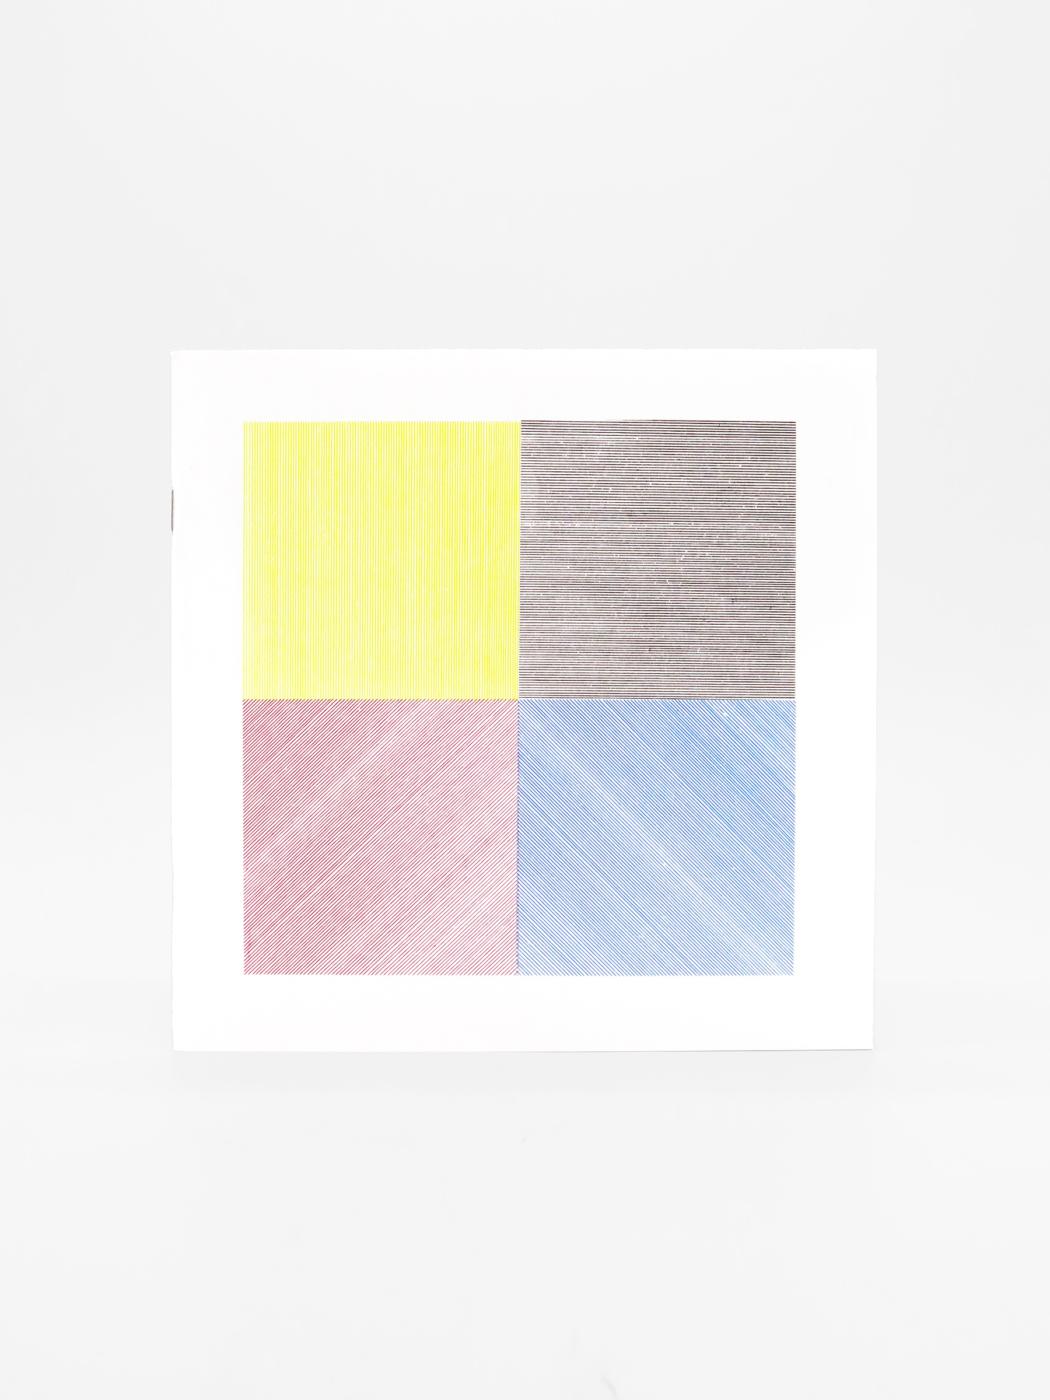 Sol LeWitt, Four Basic Kinds of Lines & Colour